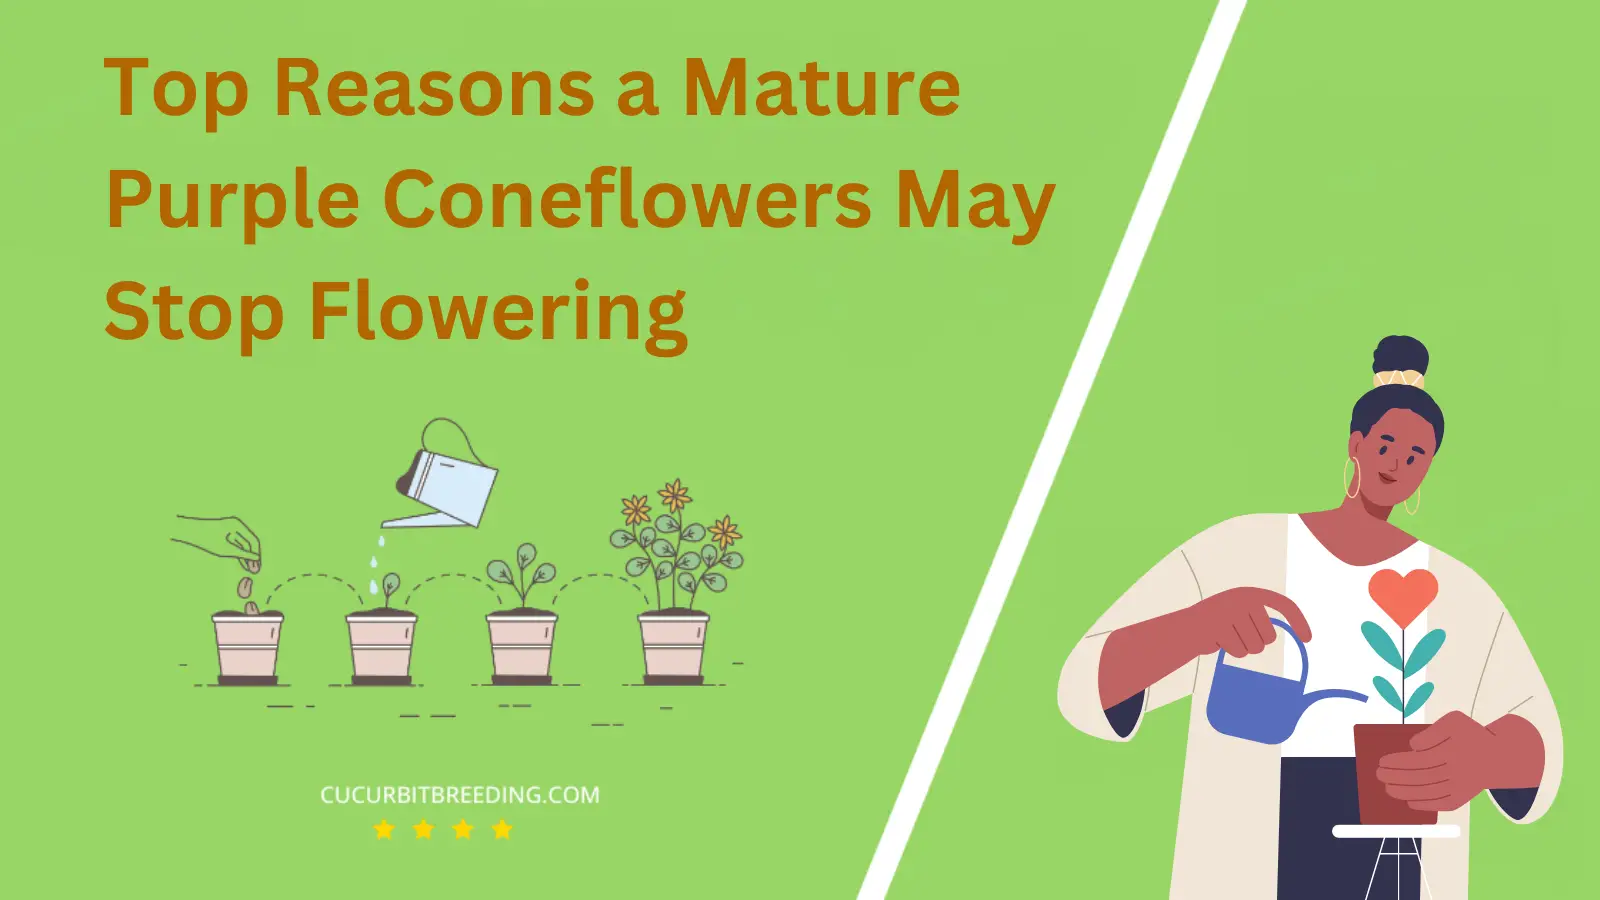 Top Reasons a Mature Purple Coneflowers May Stop Flowering